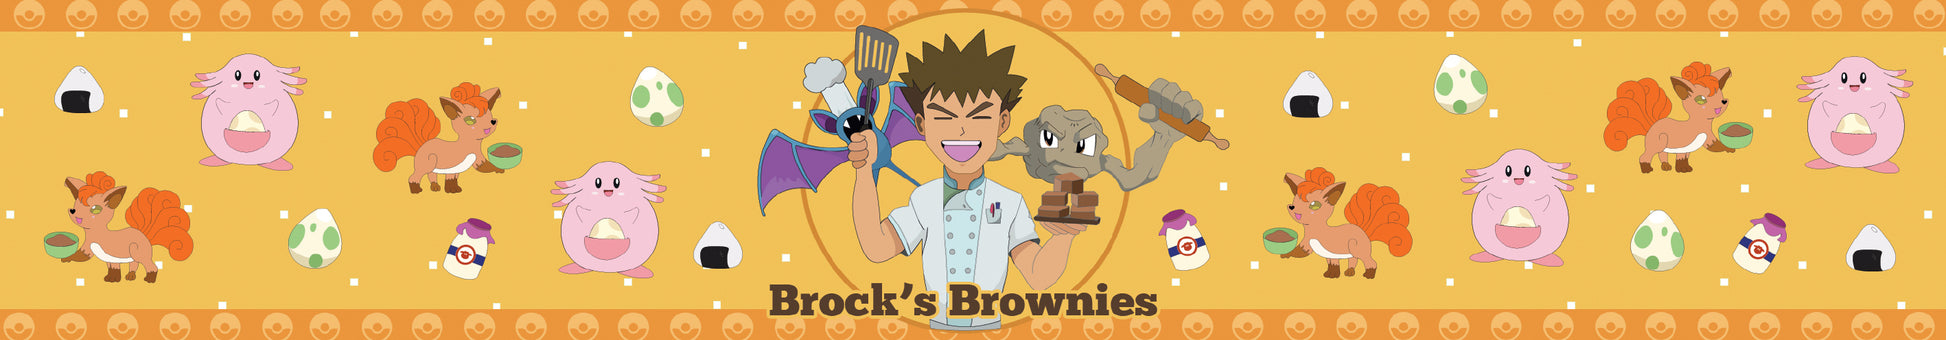 Brock's Brownies scented candle label design | Happy Piranha.